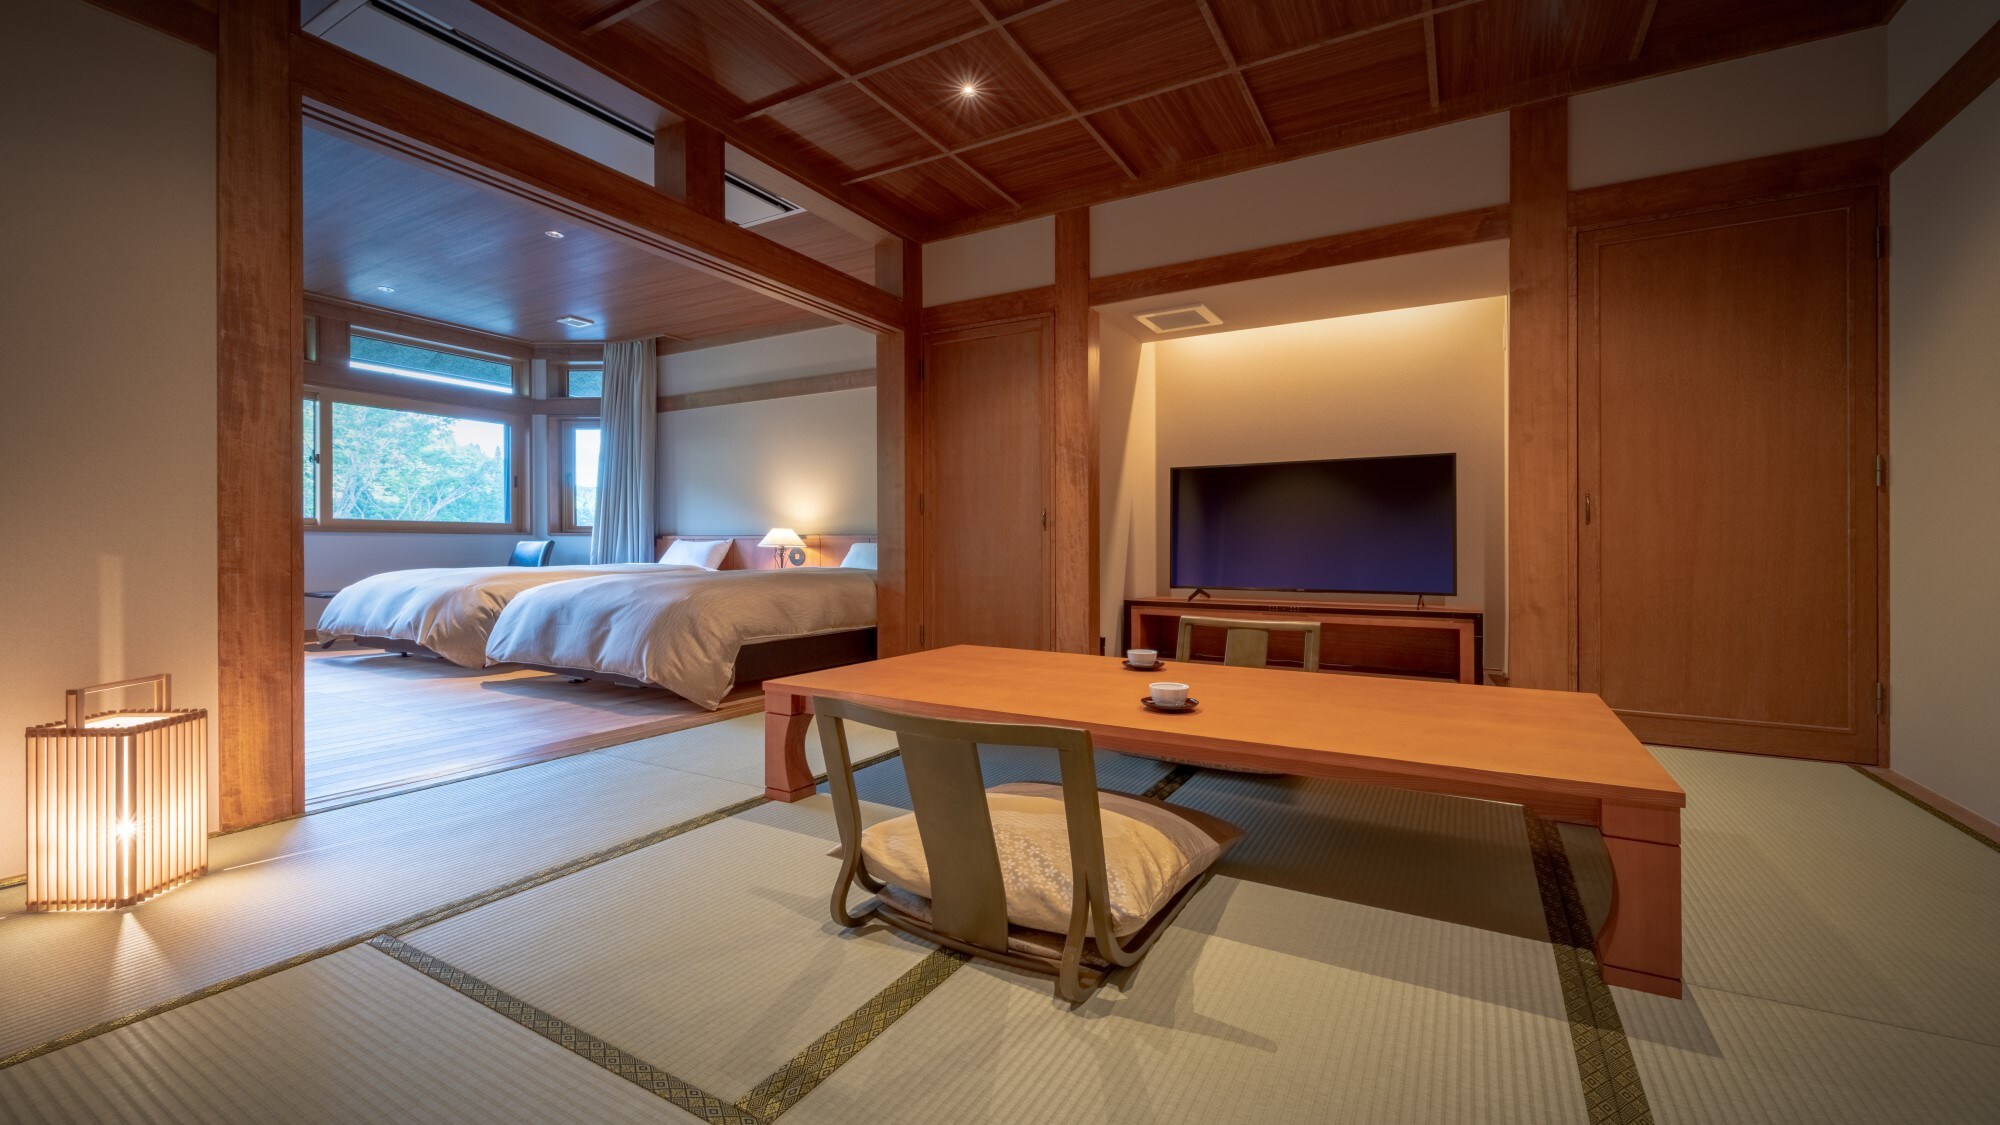 Kamar Jepang dan Barat (8 tikar tatami + kamar tidur twin) baru didirikan pada tahun 2020